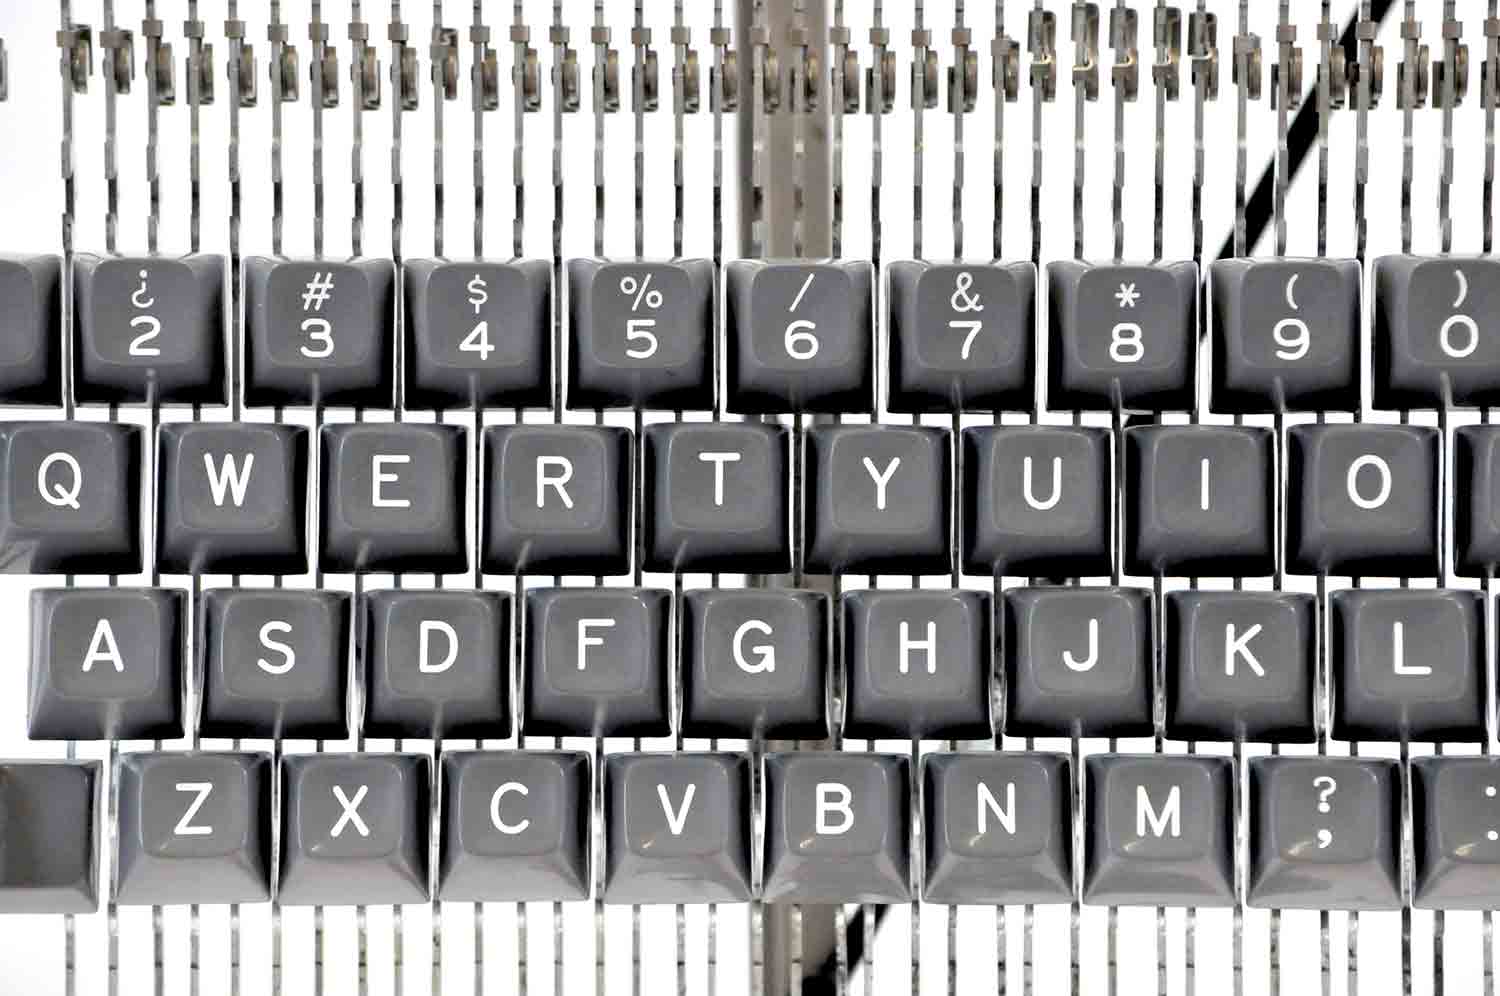 Sculpture of an interpretation of a 1960s IBM Selectric writing machine